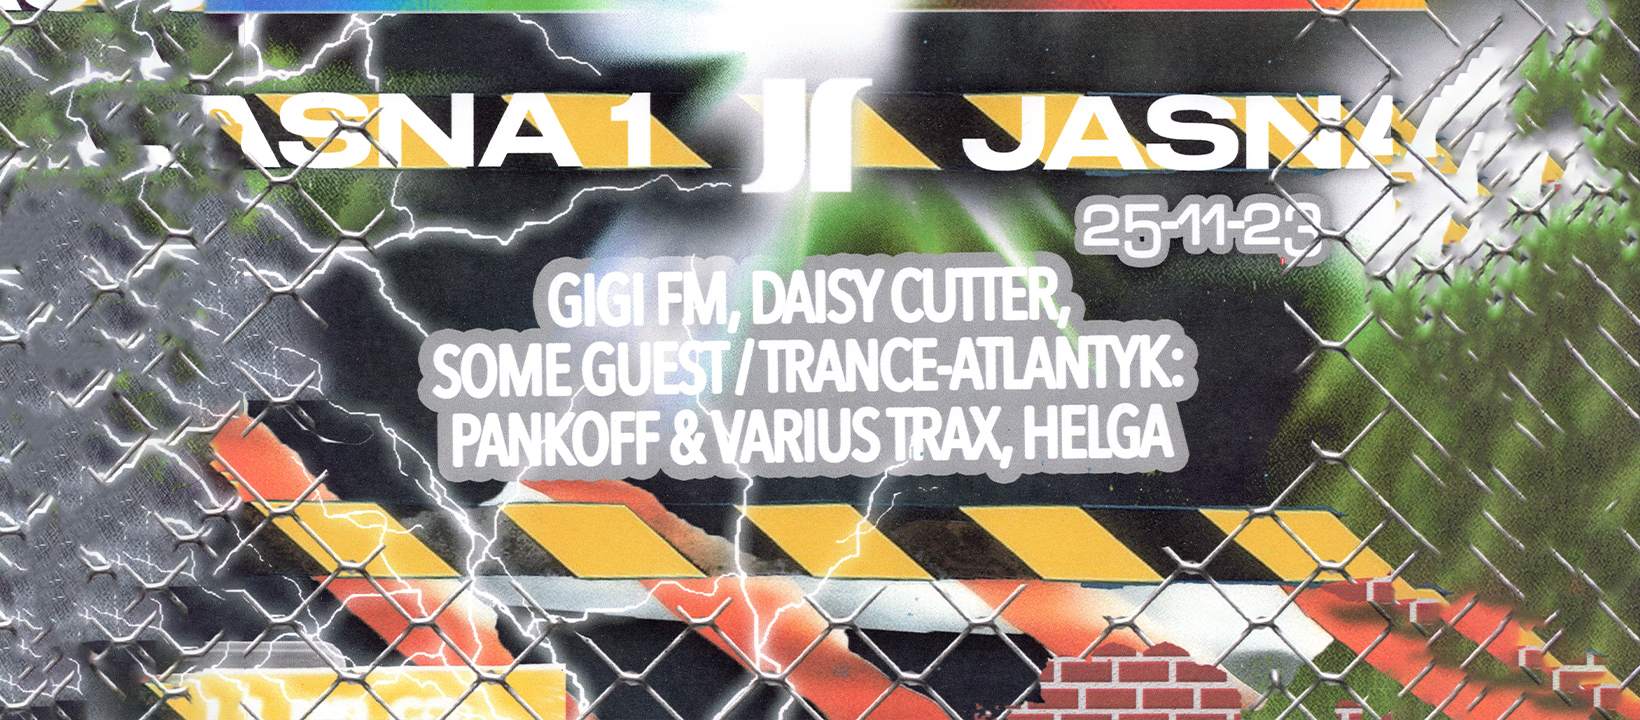 J1 - GiGi FM, daisy cutter, Some Guest / Trance-Atlantyk: Pankoff & Varius Trax, Helga - フライヤー表